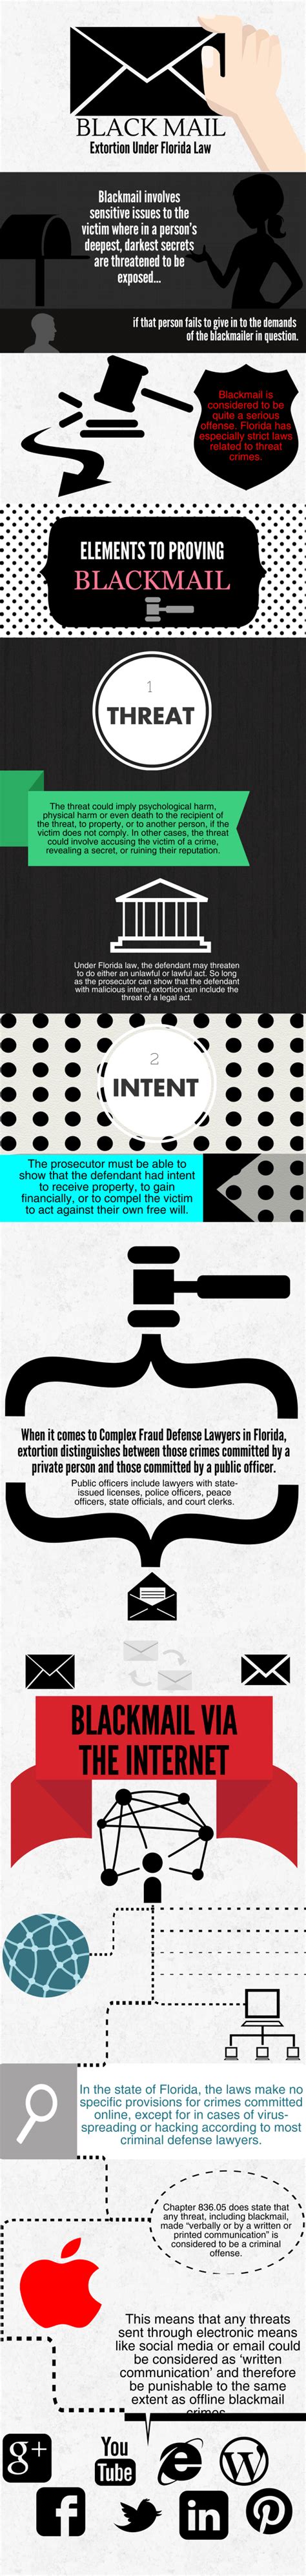 Blackmail Infographic Criminal Defense Florida Law Criminal Defense